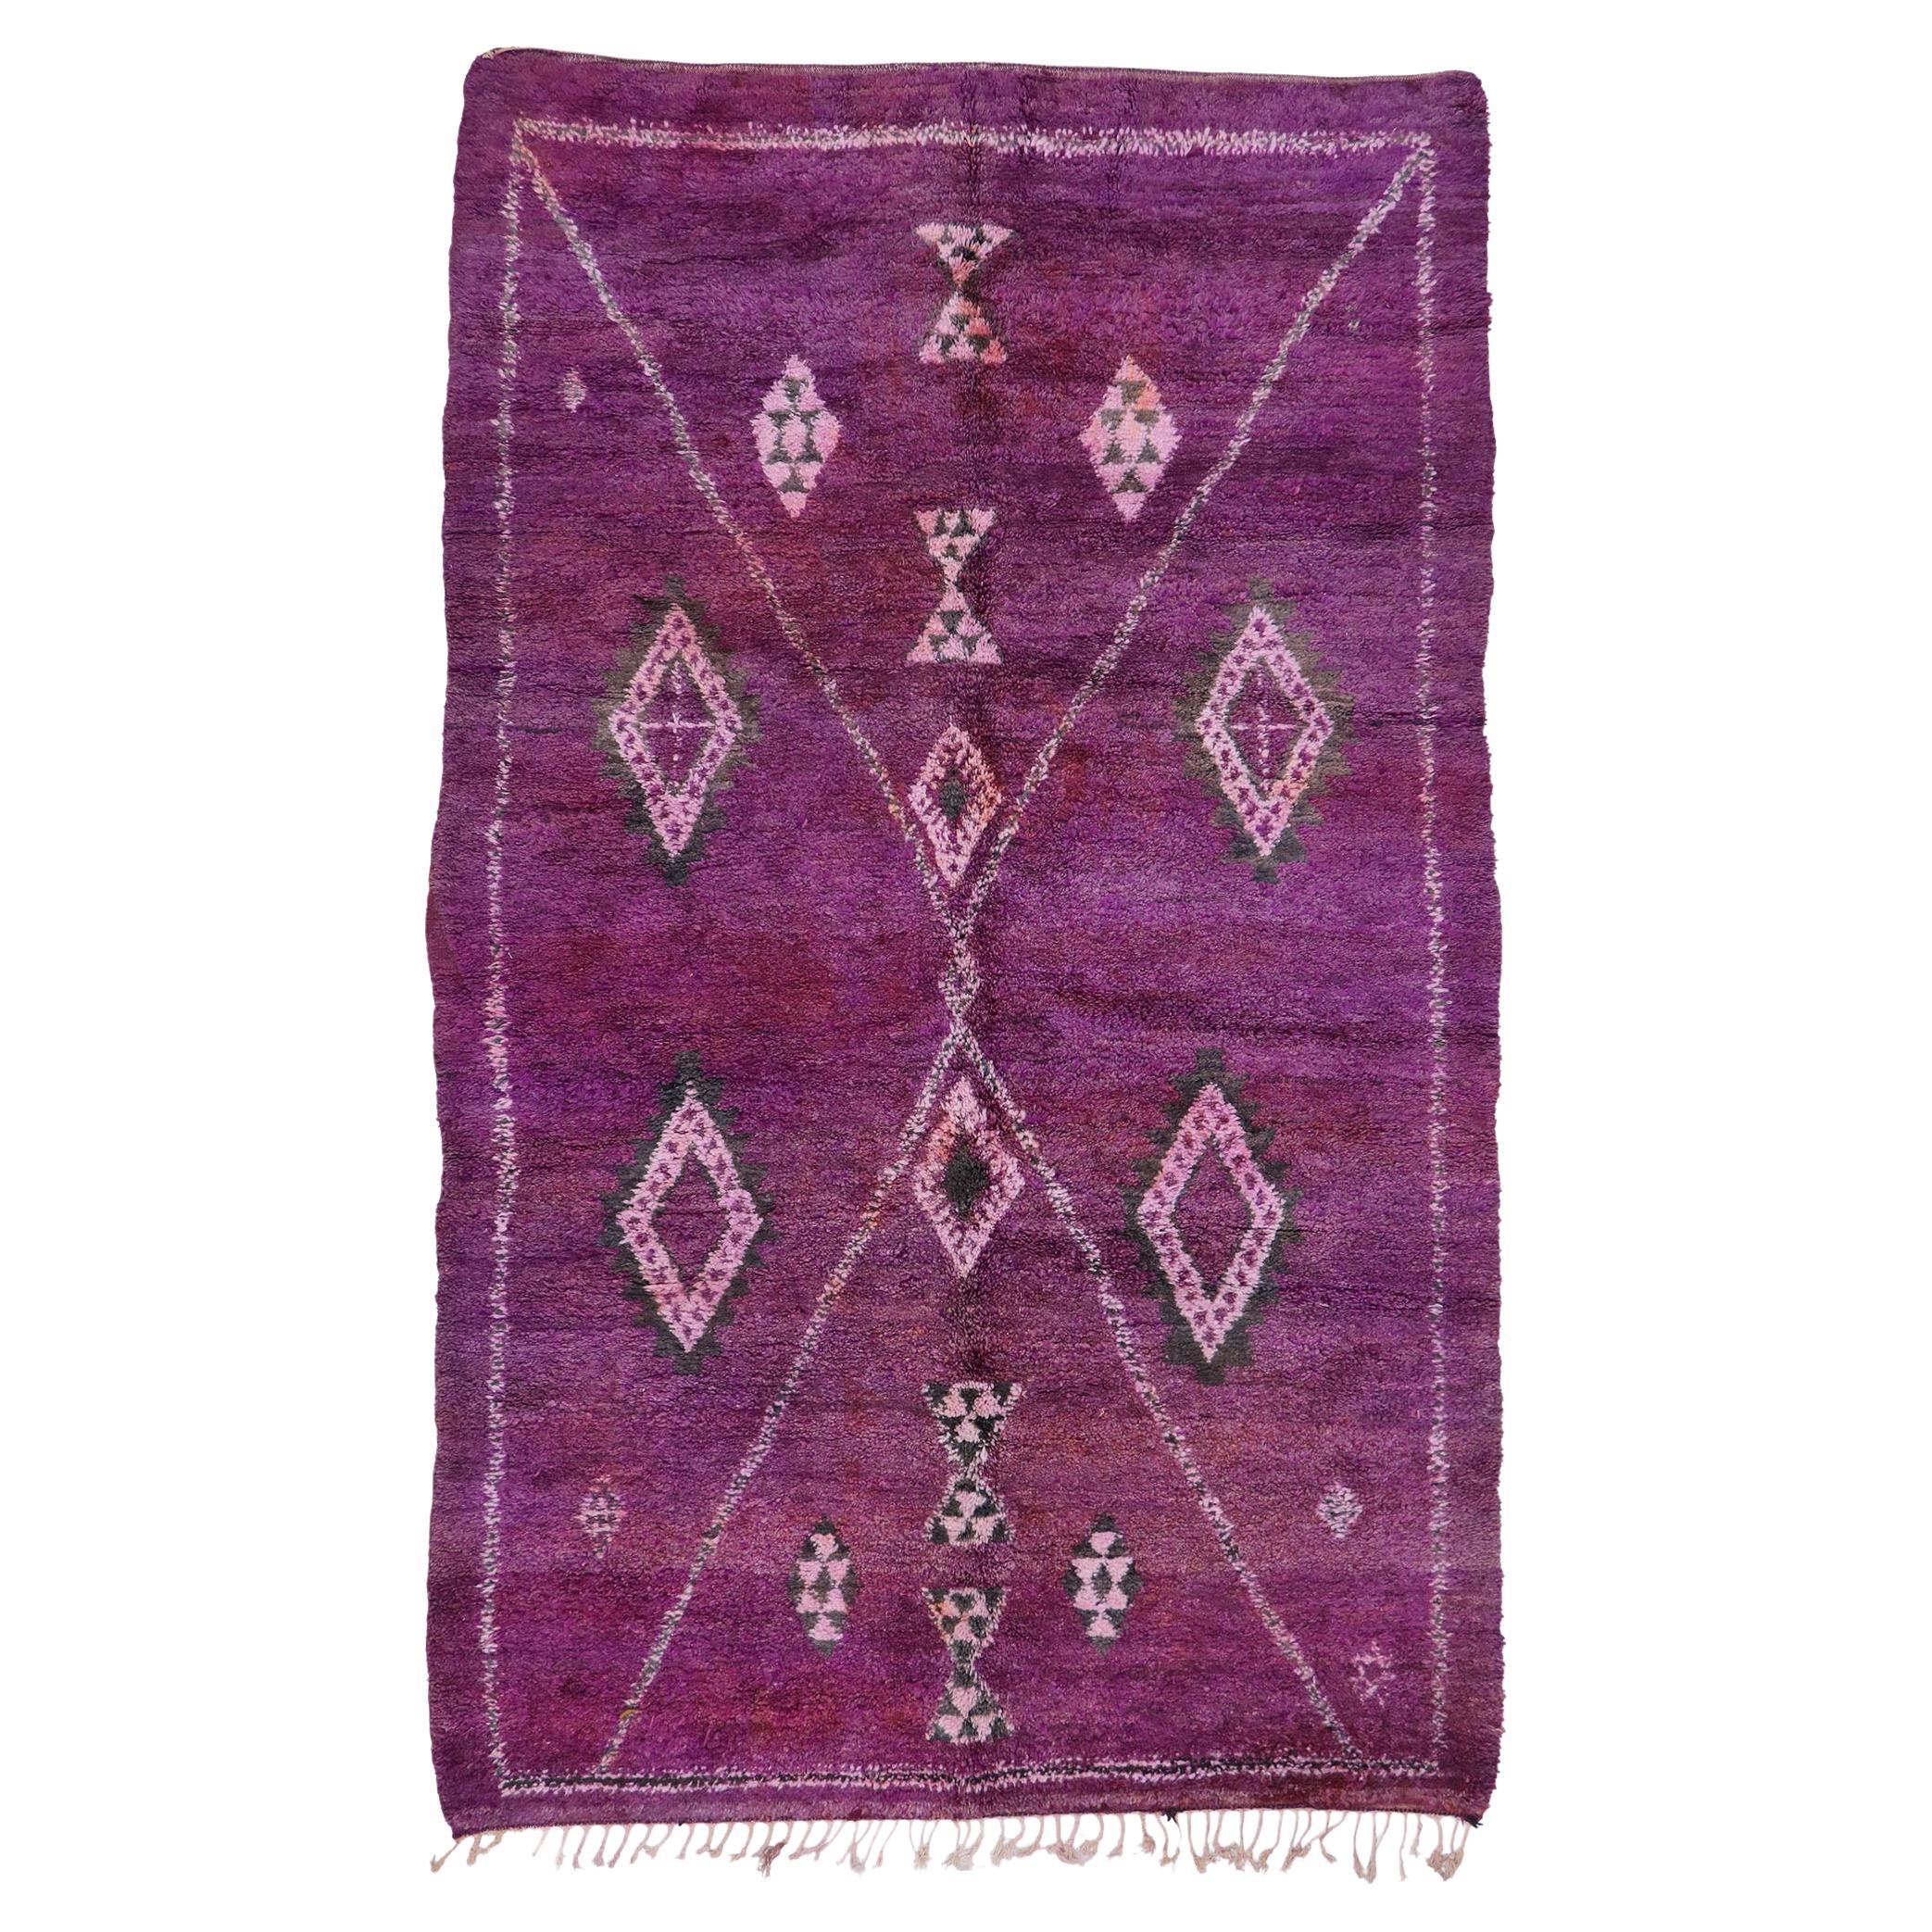 Lila Beni Mrirt Marokkanischer Vintage-Teppich, Vintage, Bohemian Meets Tribal Enchantment, Stammeskunst